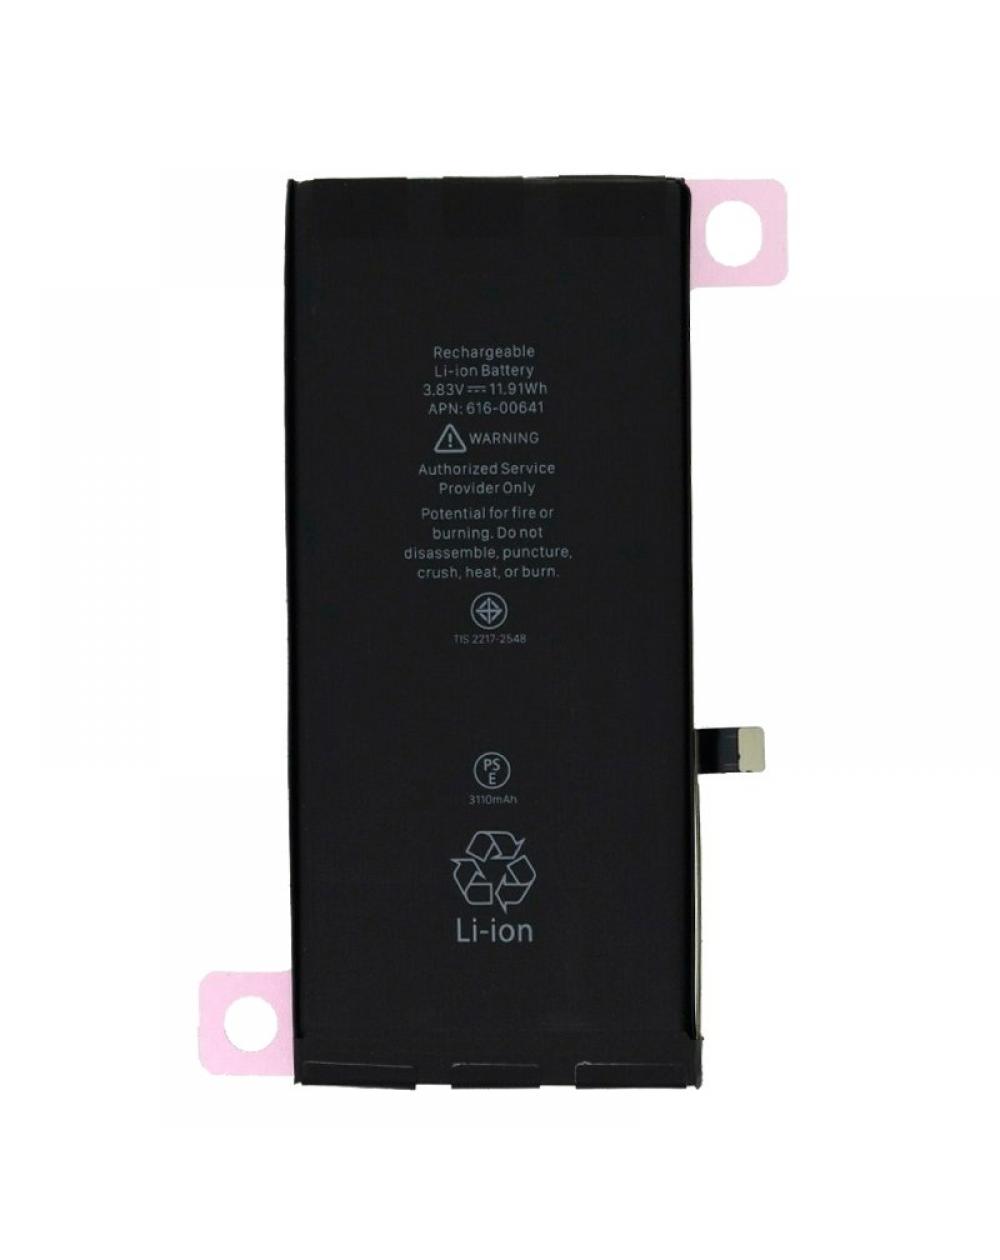 Bateria COOL Compatible para iPhone 11 - Imagen 1